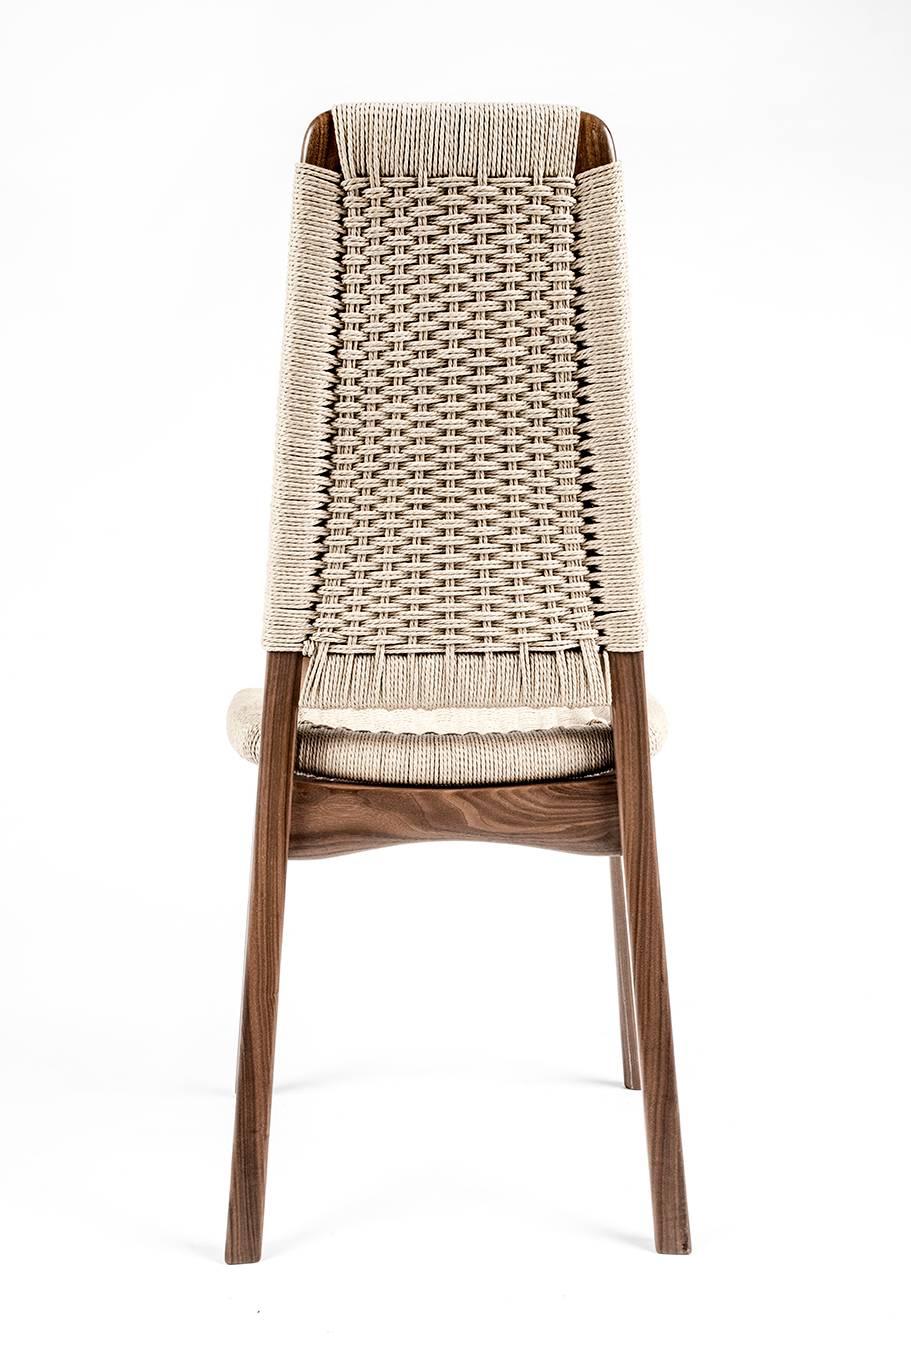 Mid-Century Modern Chair, Woven Danish Cord, Walnut, Hardwood, Mid Century, Dining, Office, Semigood For Sale